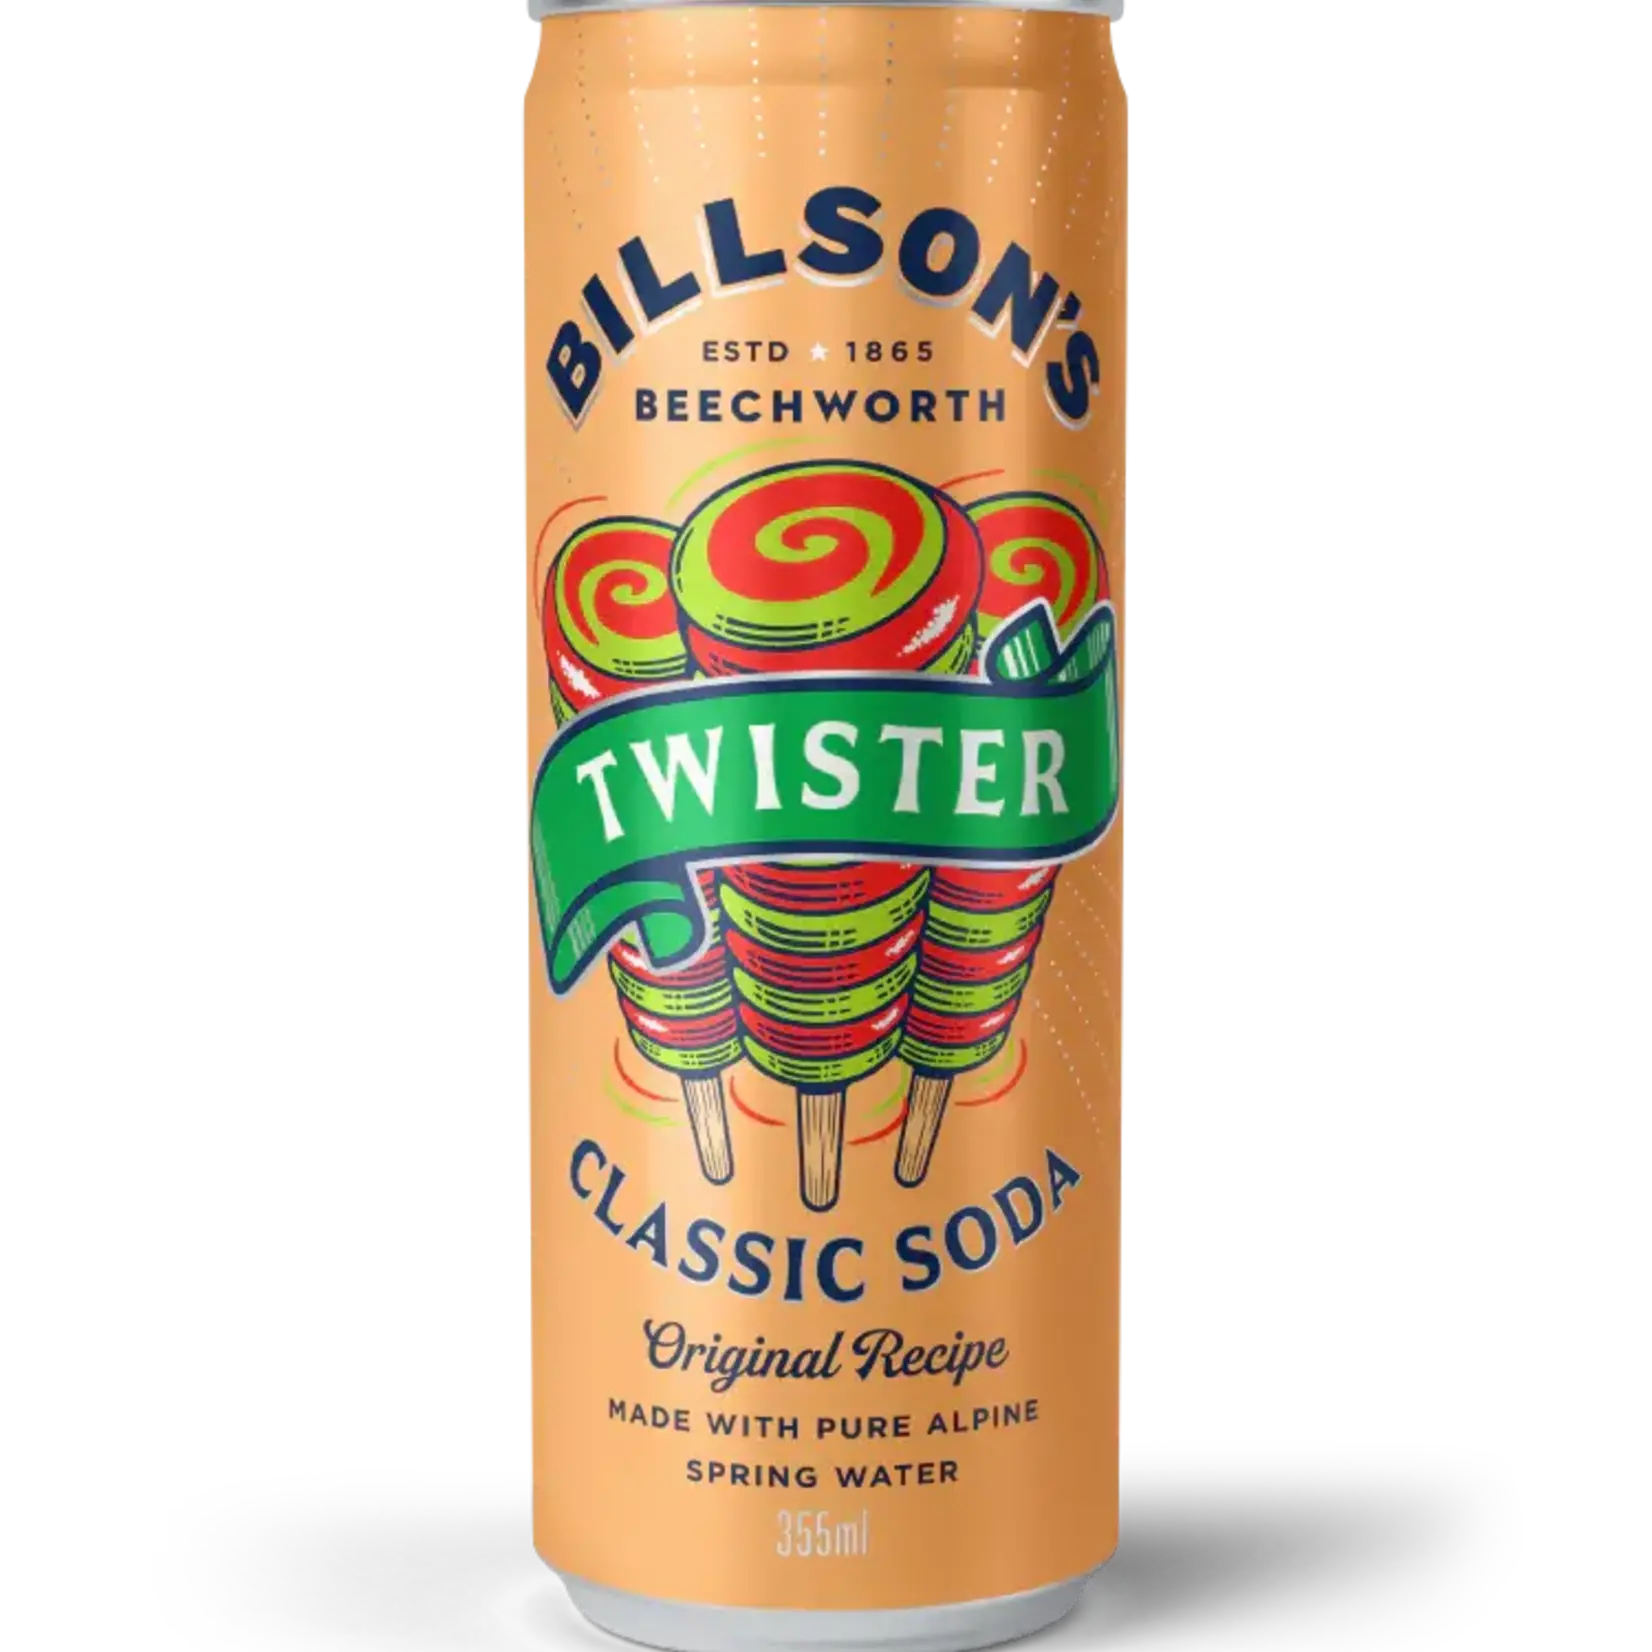 Classic soda Twister 355ml Billson’s